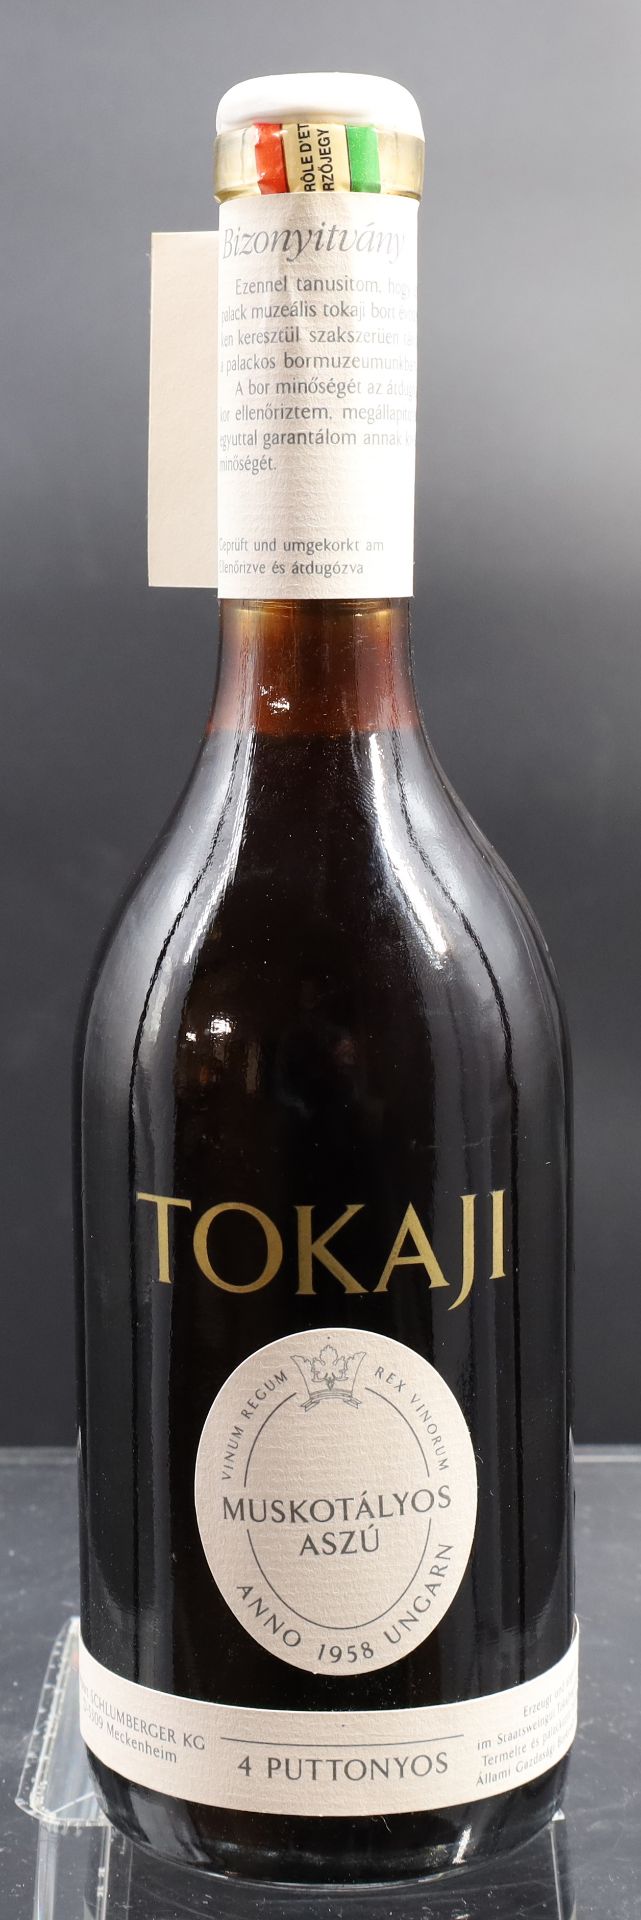 1 bottle of TOKAJI. Aszu. 4 puttonyos. Hungary. - Image 2 of 7